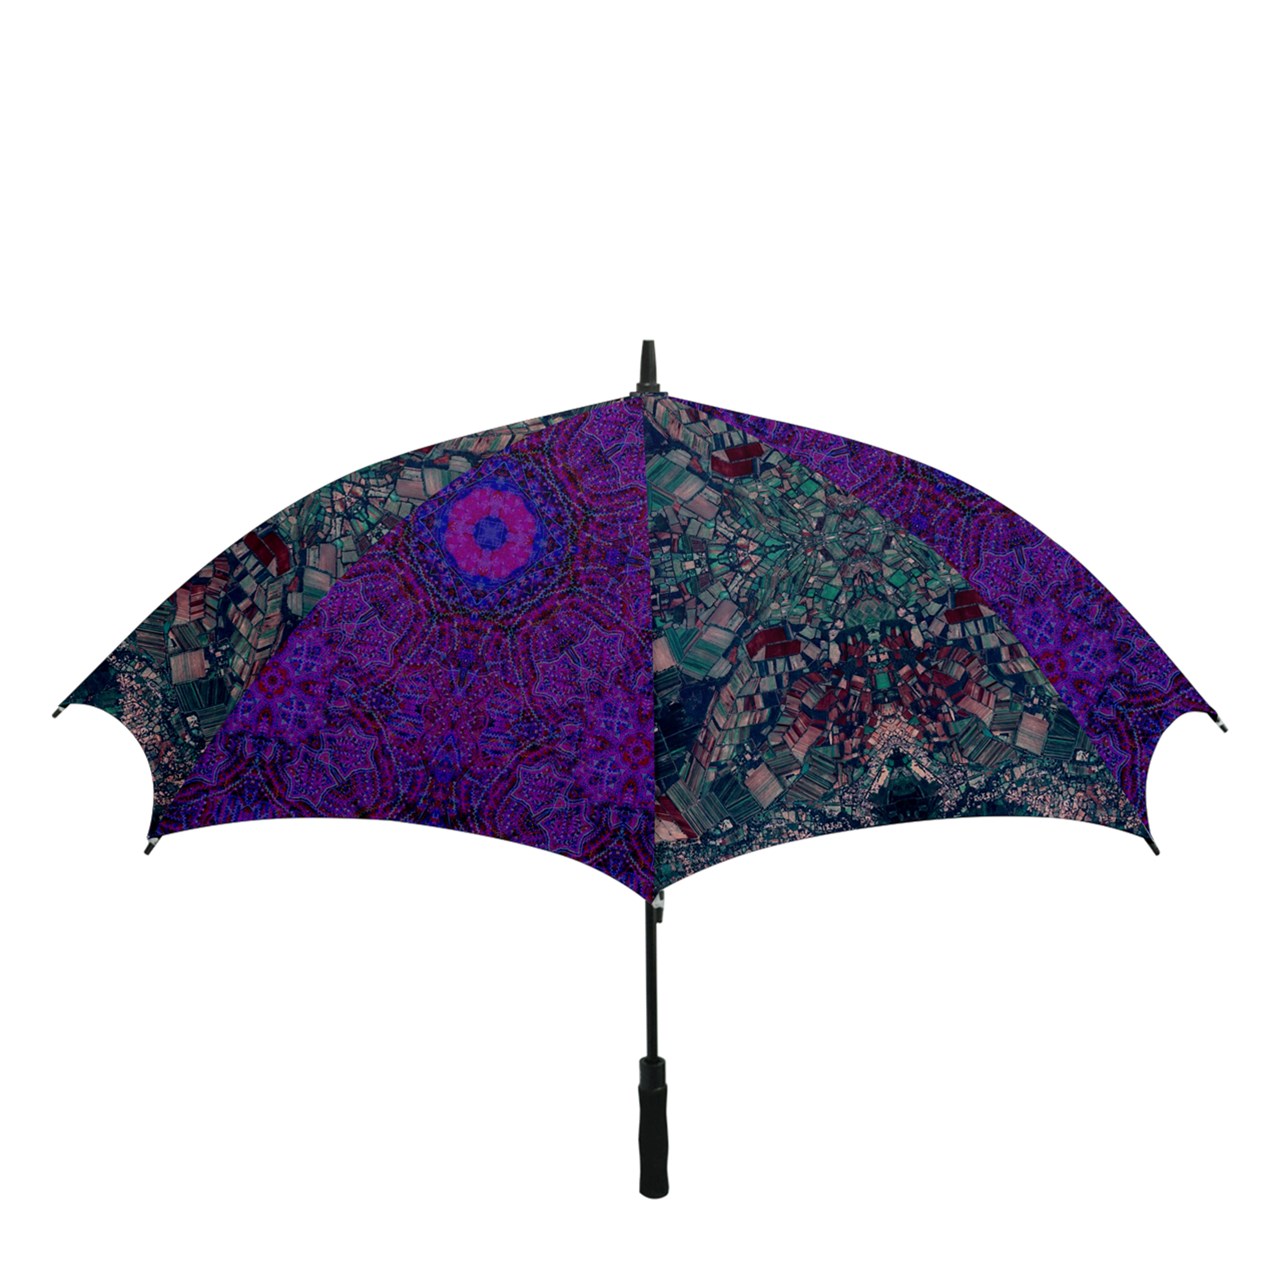 Bacanda Festival XL 51 Inch Umbrella / Parasol